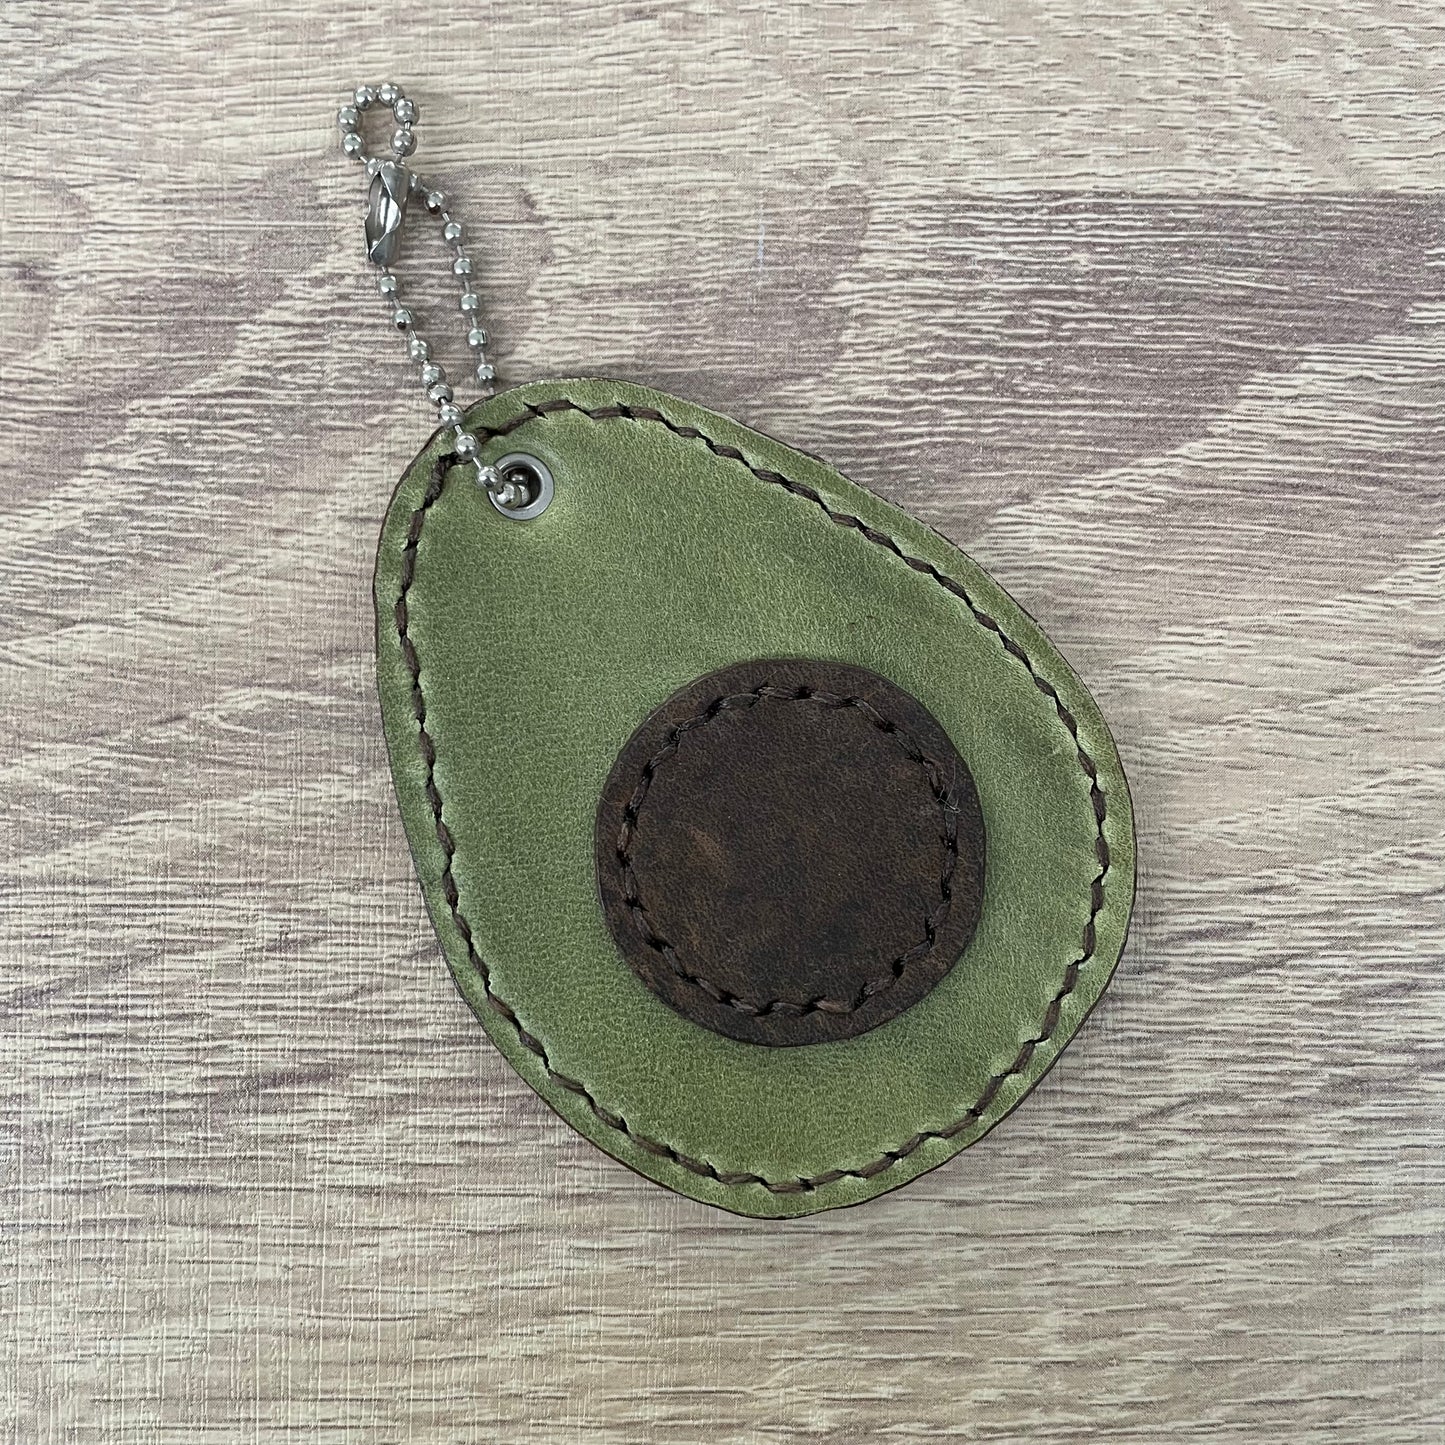 Avocado Hand-Stitched Keychain Charm Ornament